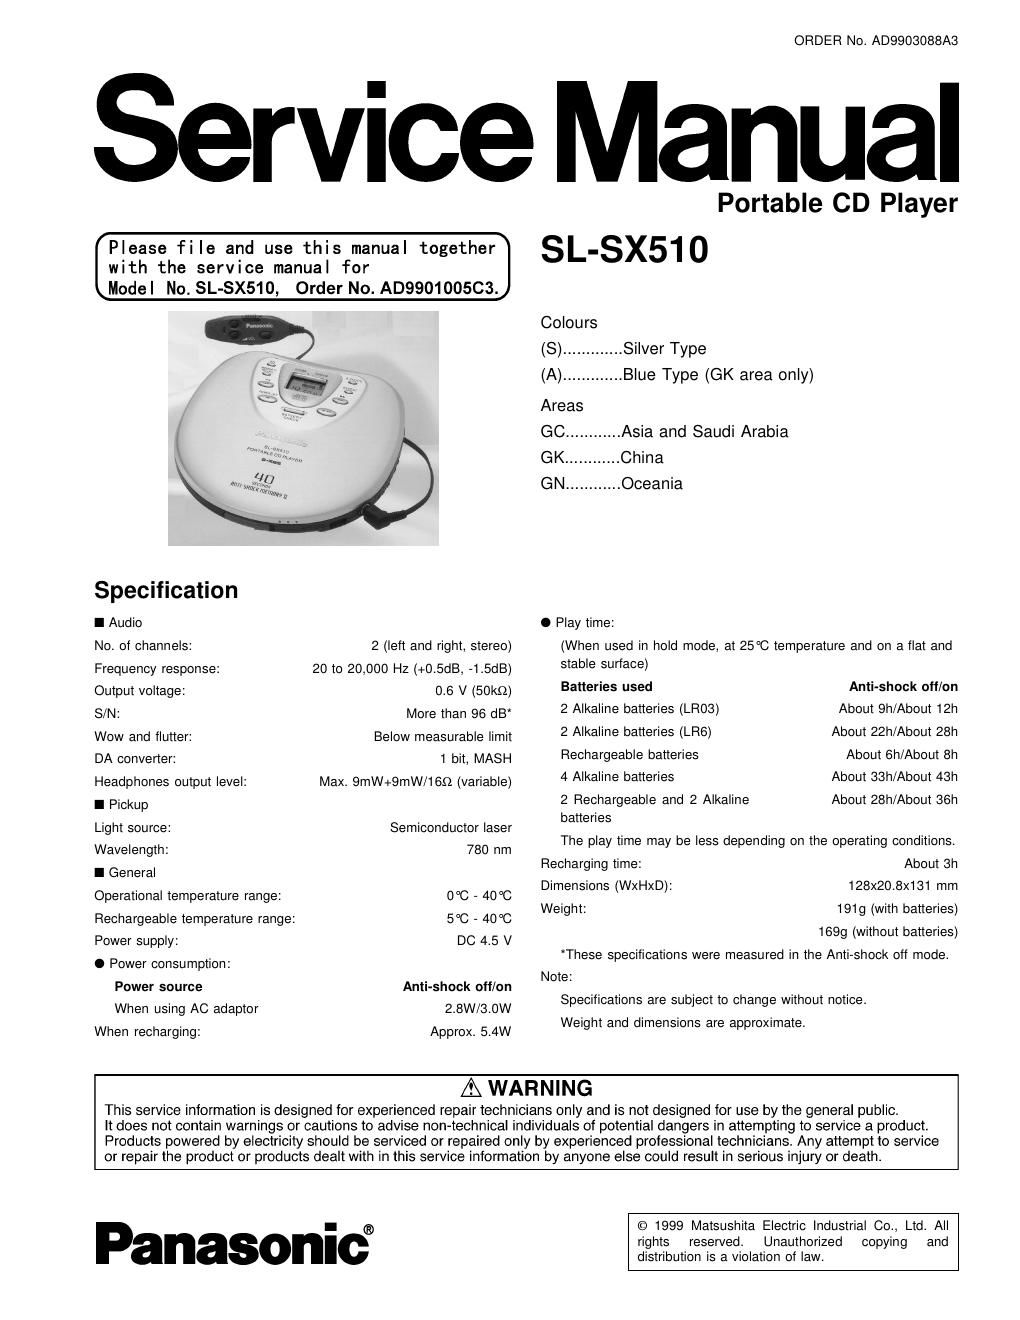 panasonic sl sx 510 service manual